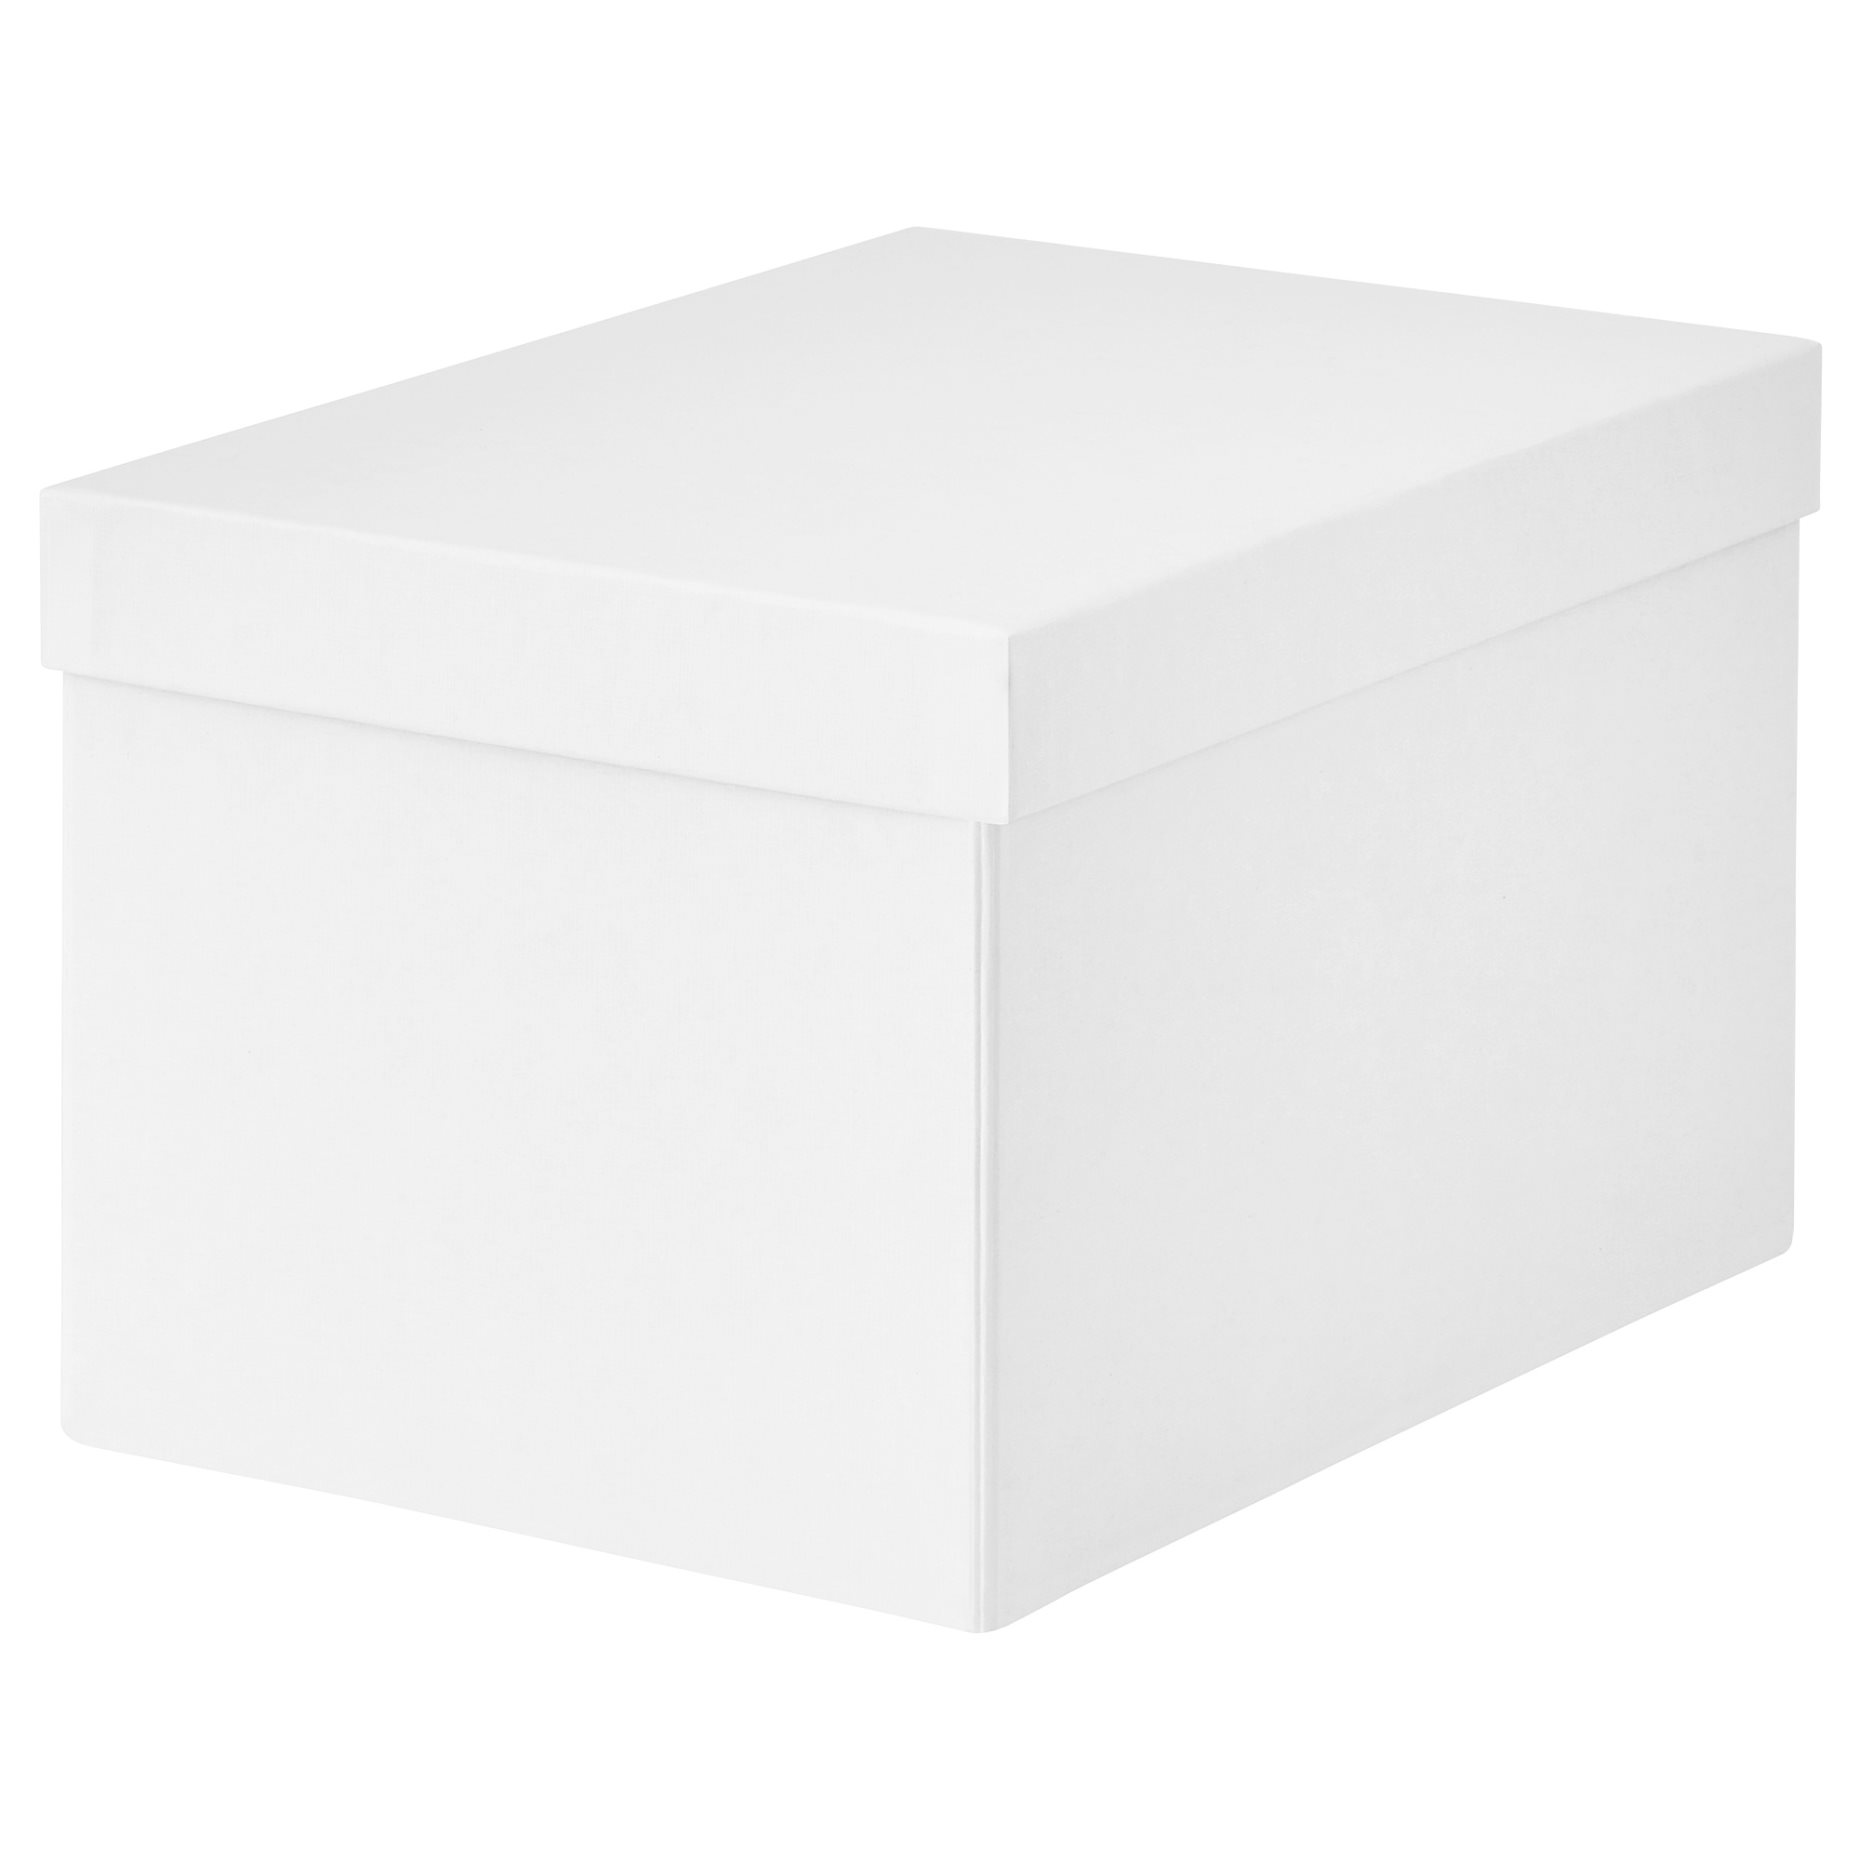 TJENA, кутия с капак, 25х18х15, 103.954.21